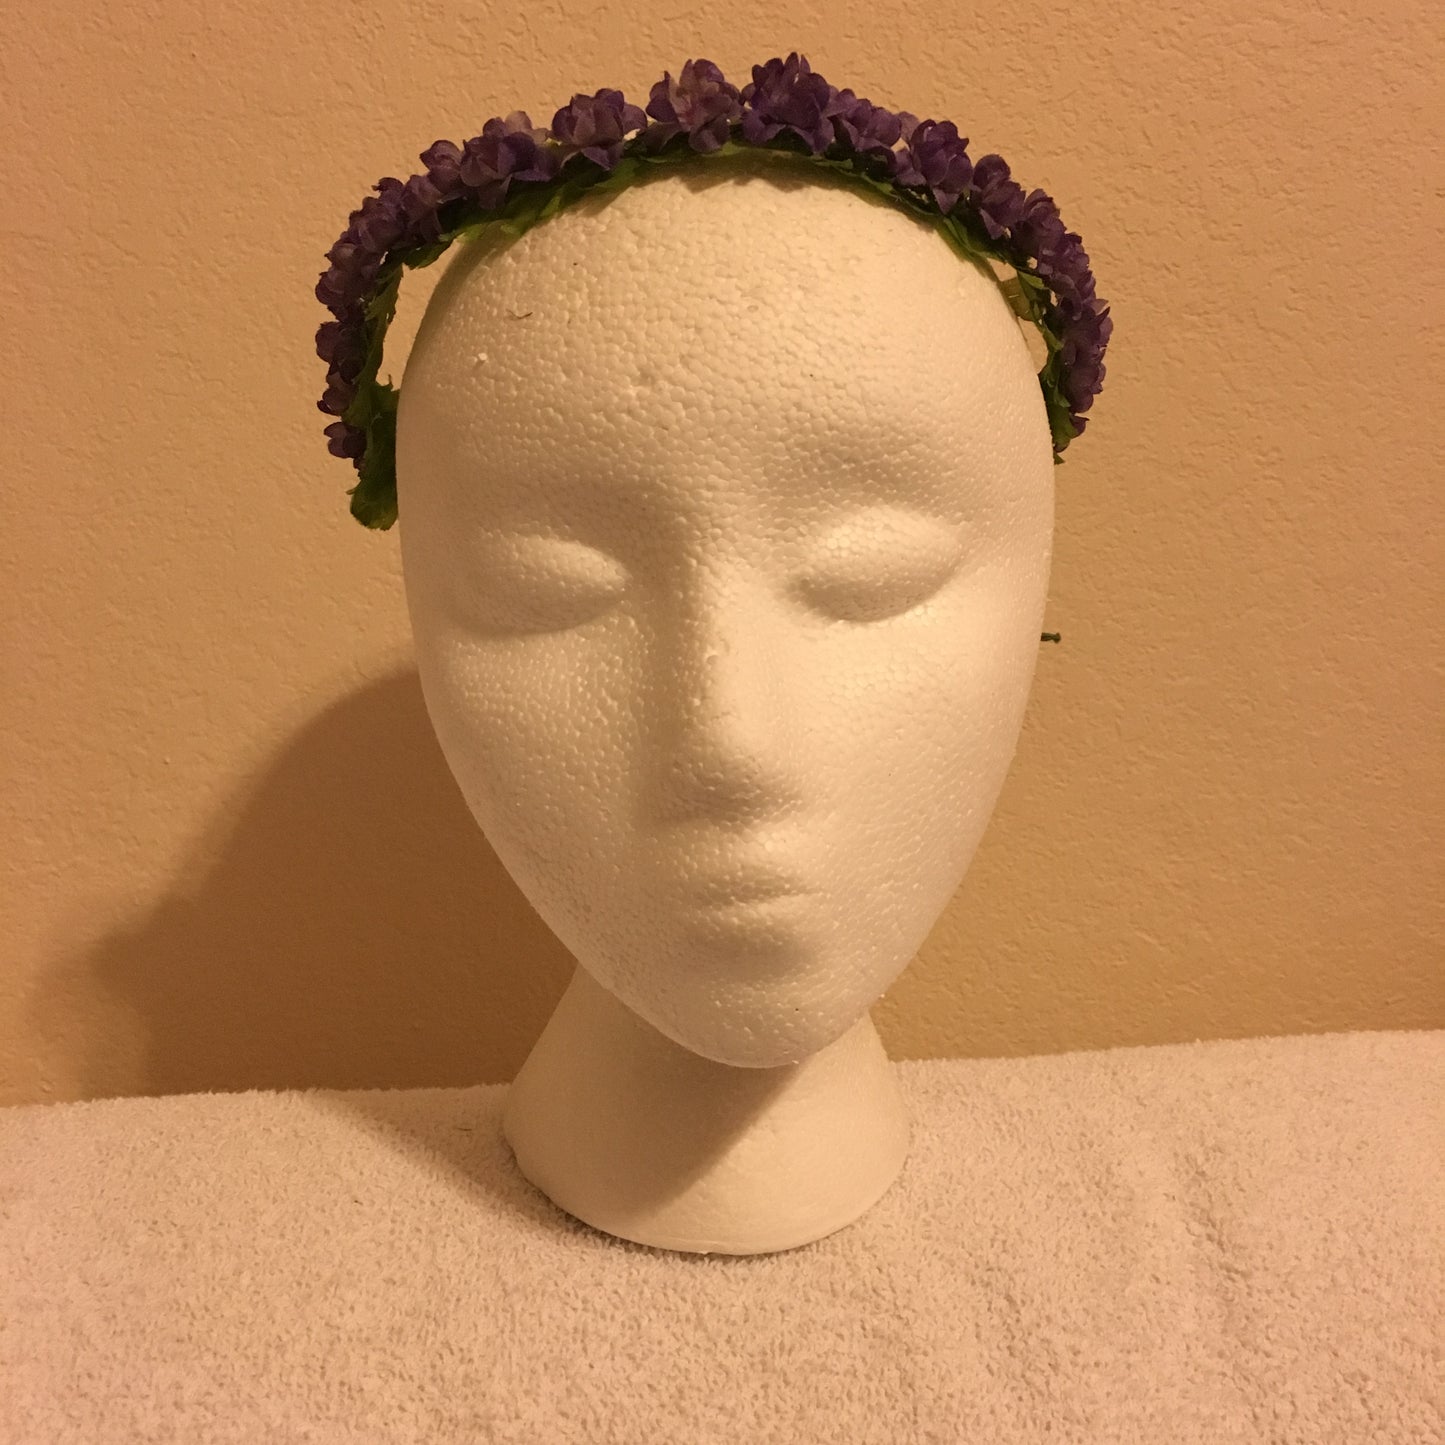 Extra Small Wreath - Purple flowers